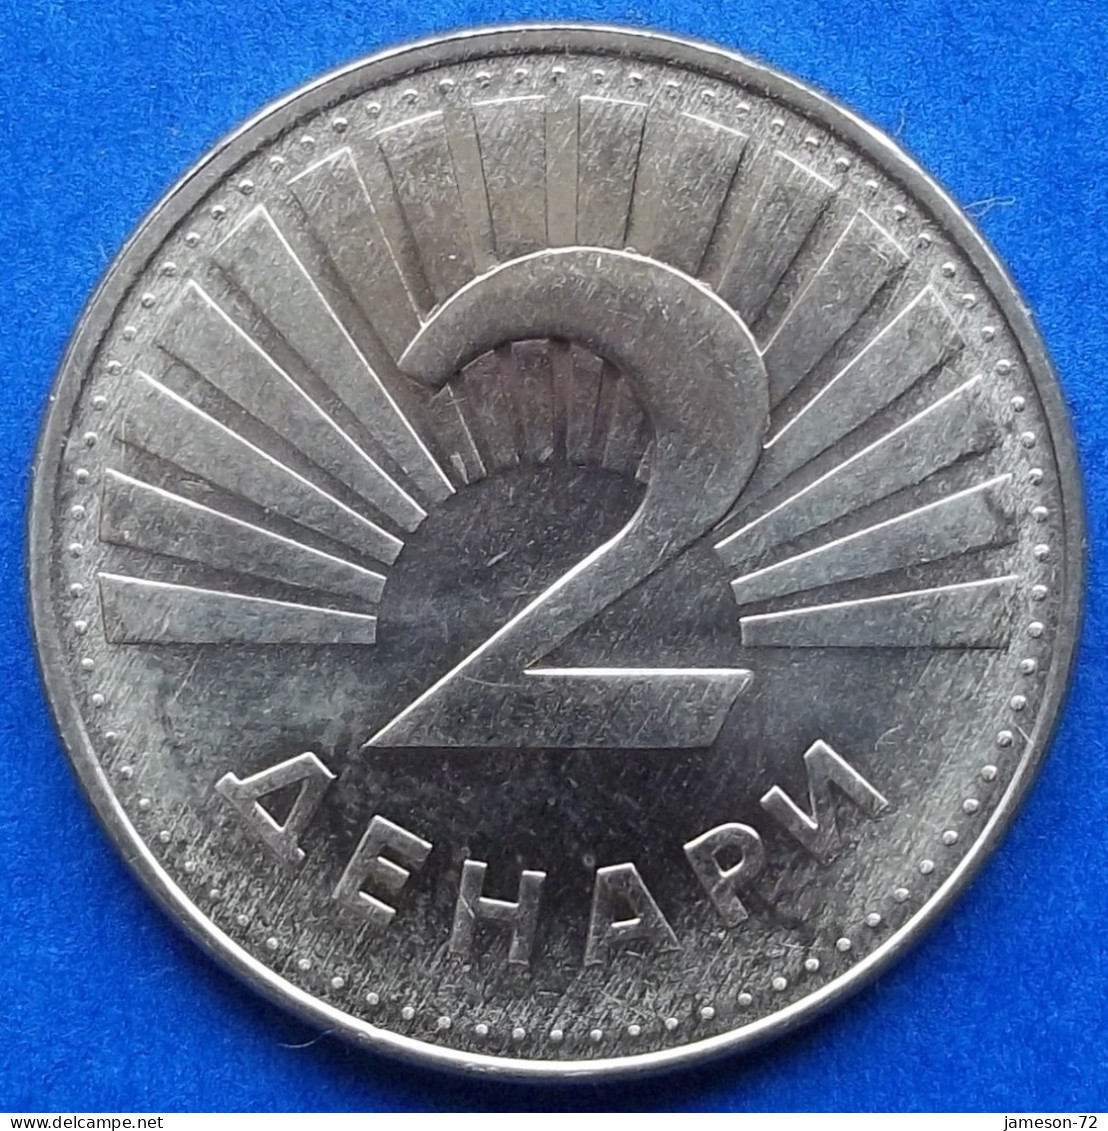 MACEDONIA - 2 Denari 2018 "Trout" KM# 3a Republic (1991) - Edelweiss Coins - North Macedonia